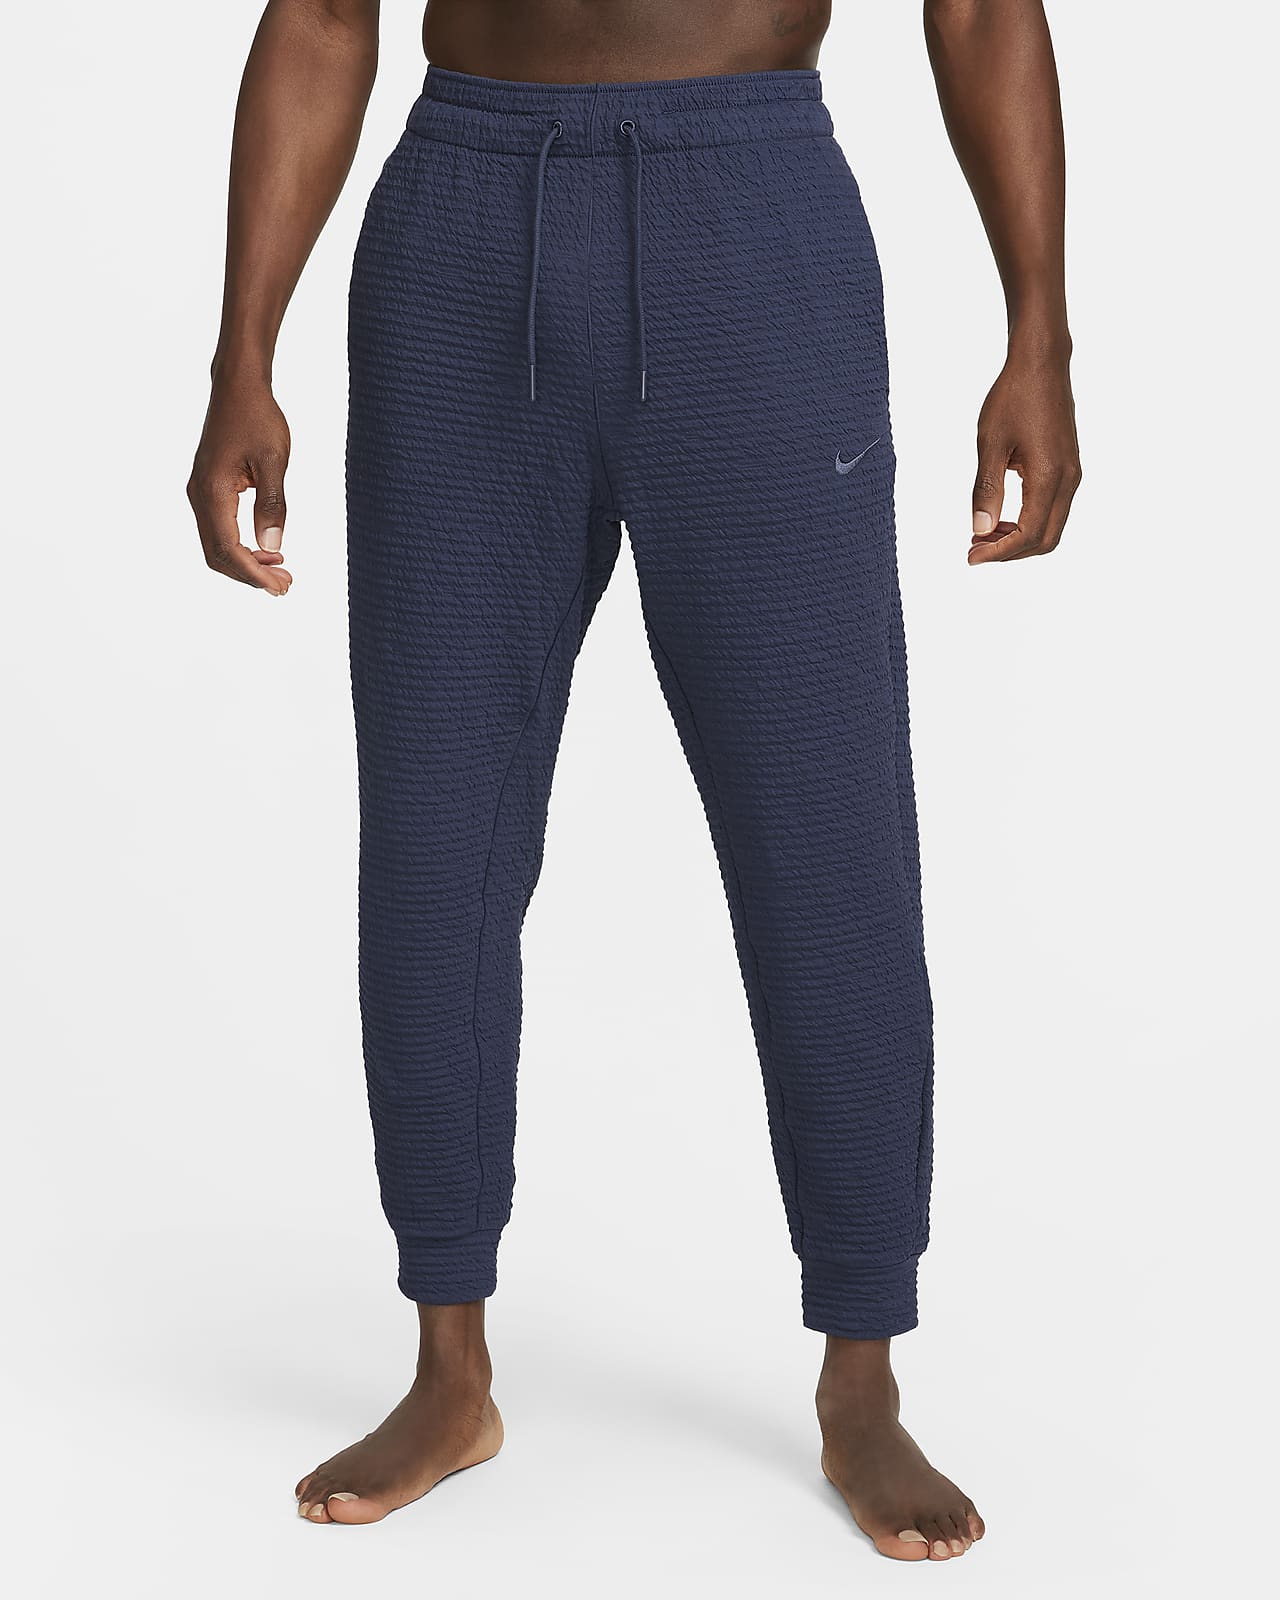 Pants Dri-FIT para hombre Nike Yoga